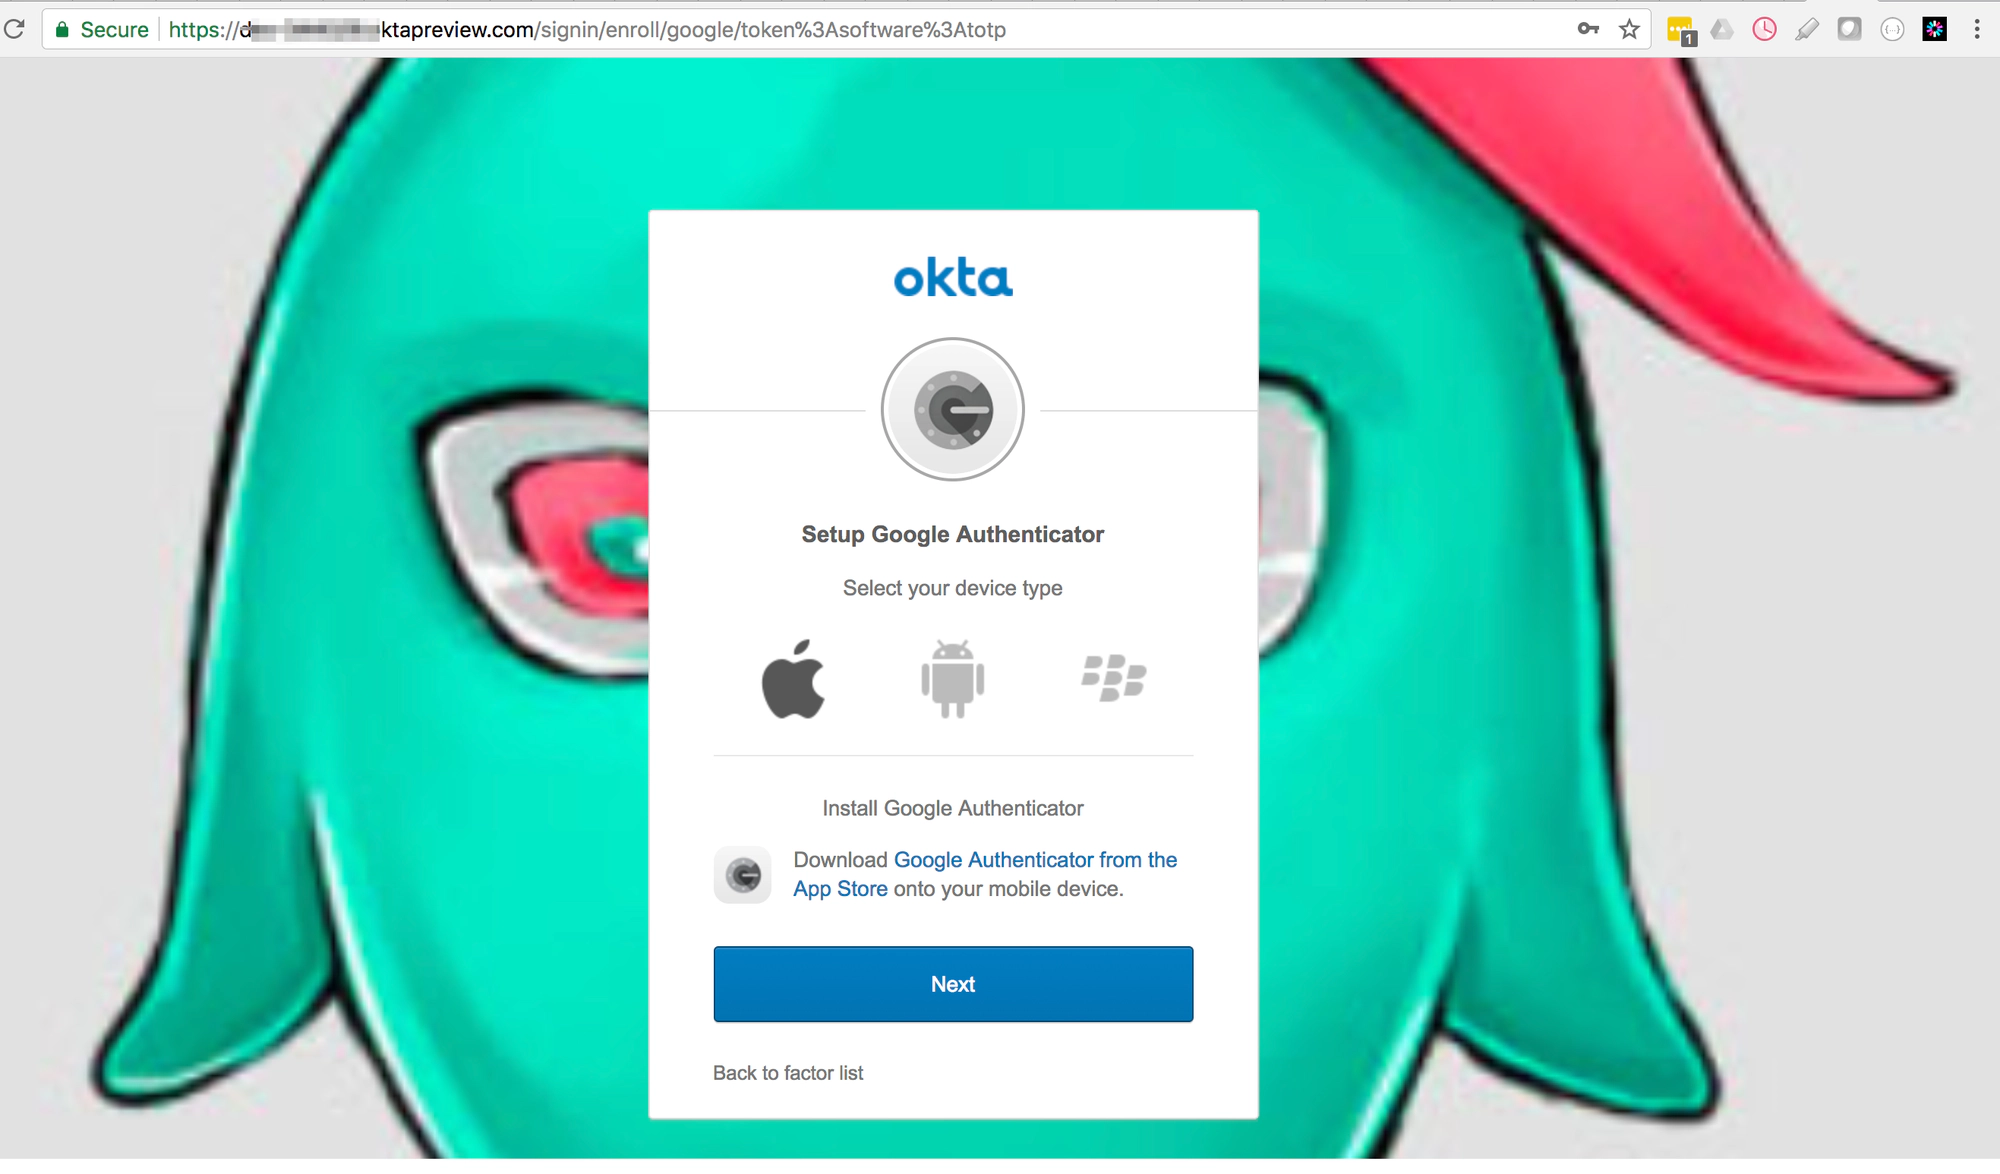 okta-mfa-download-google-authenticator-2